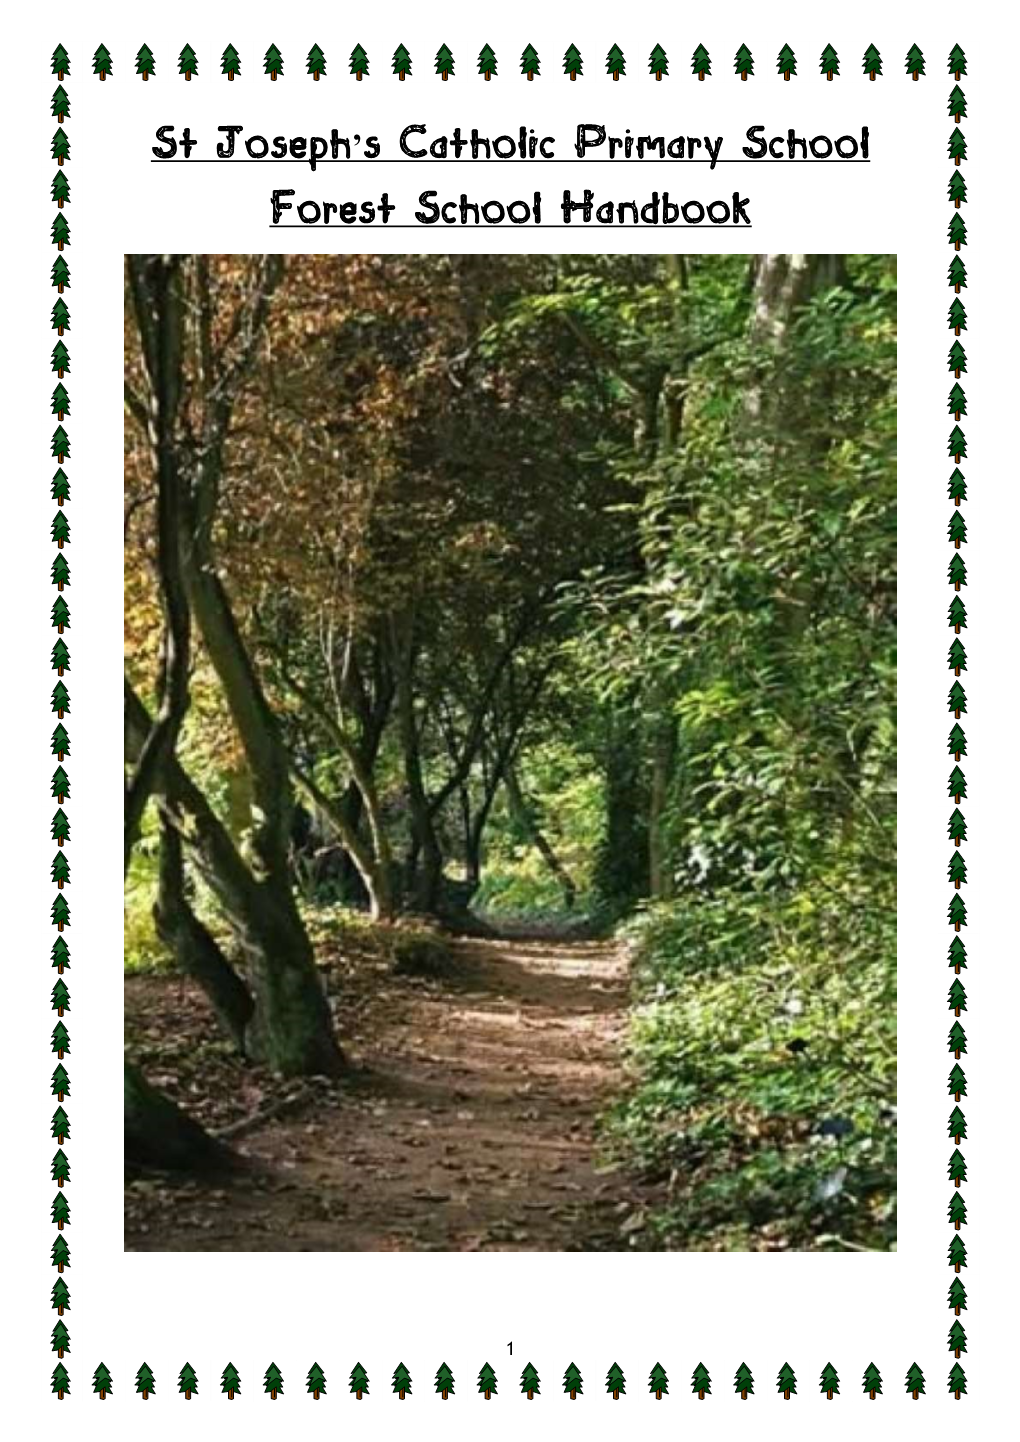 St Joseph's Catholic Primary School Forest School Handbook